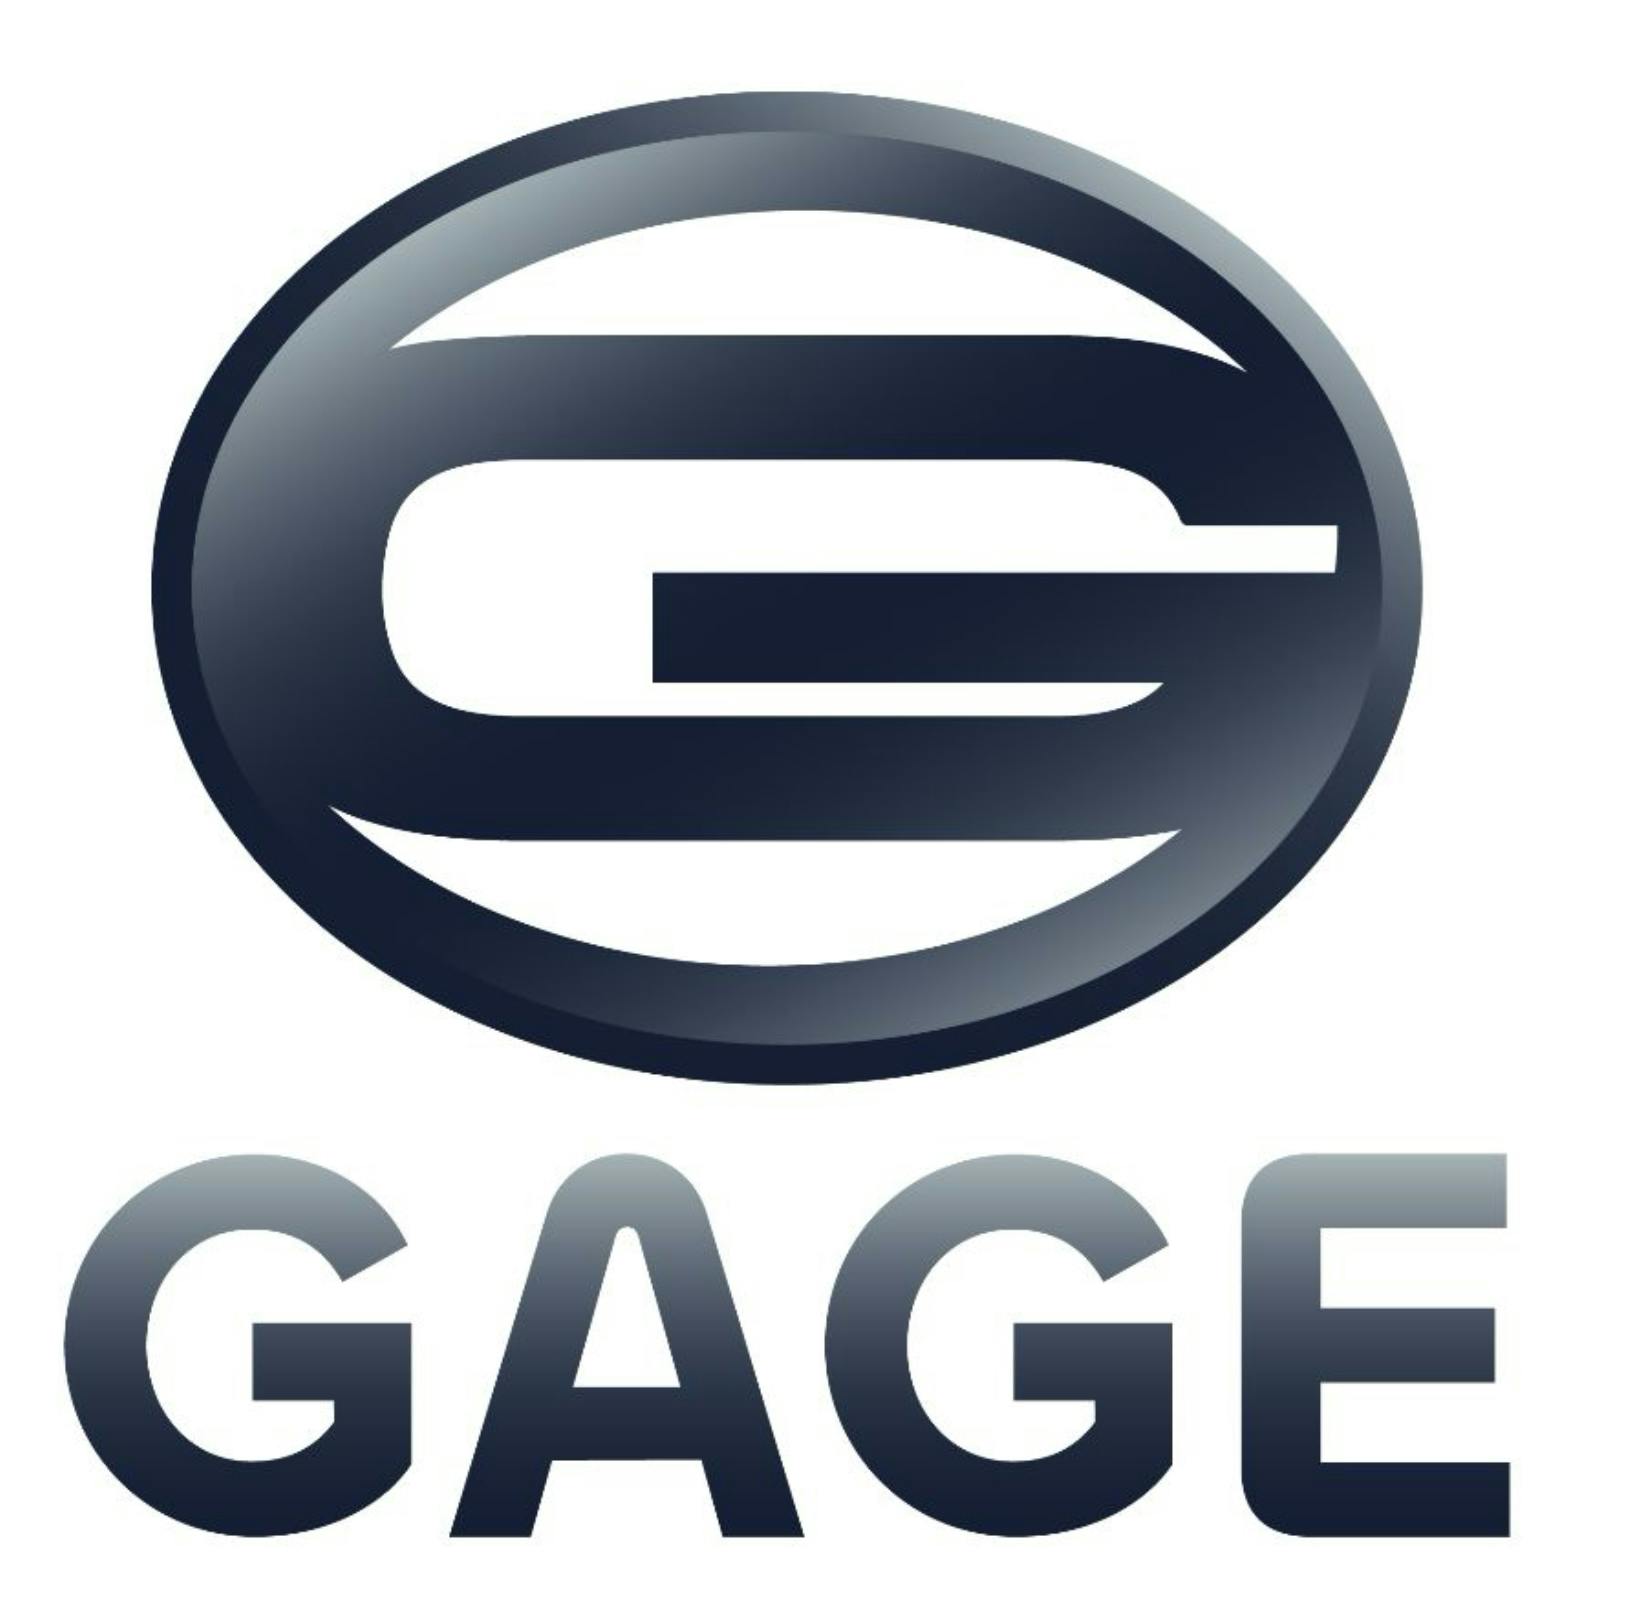 Gage